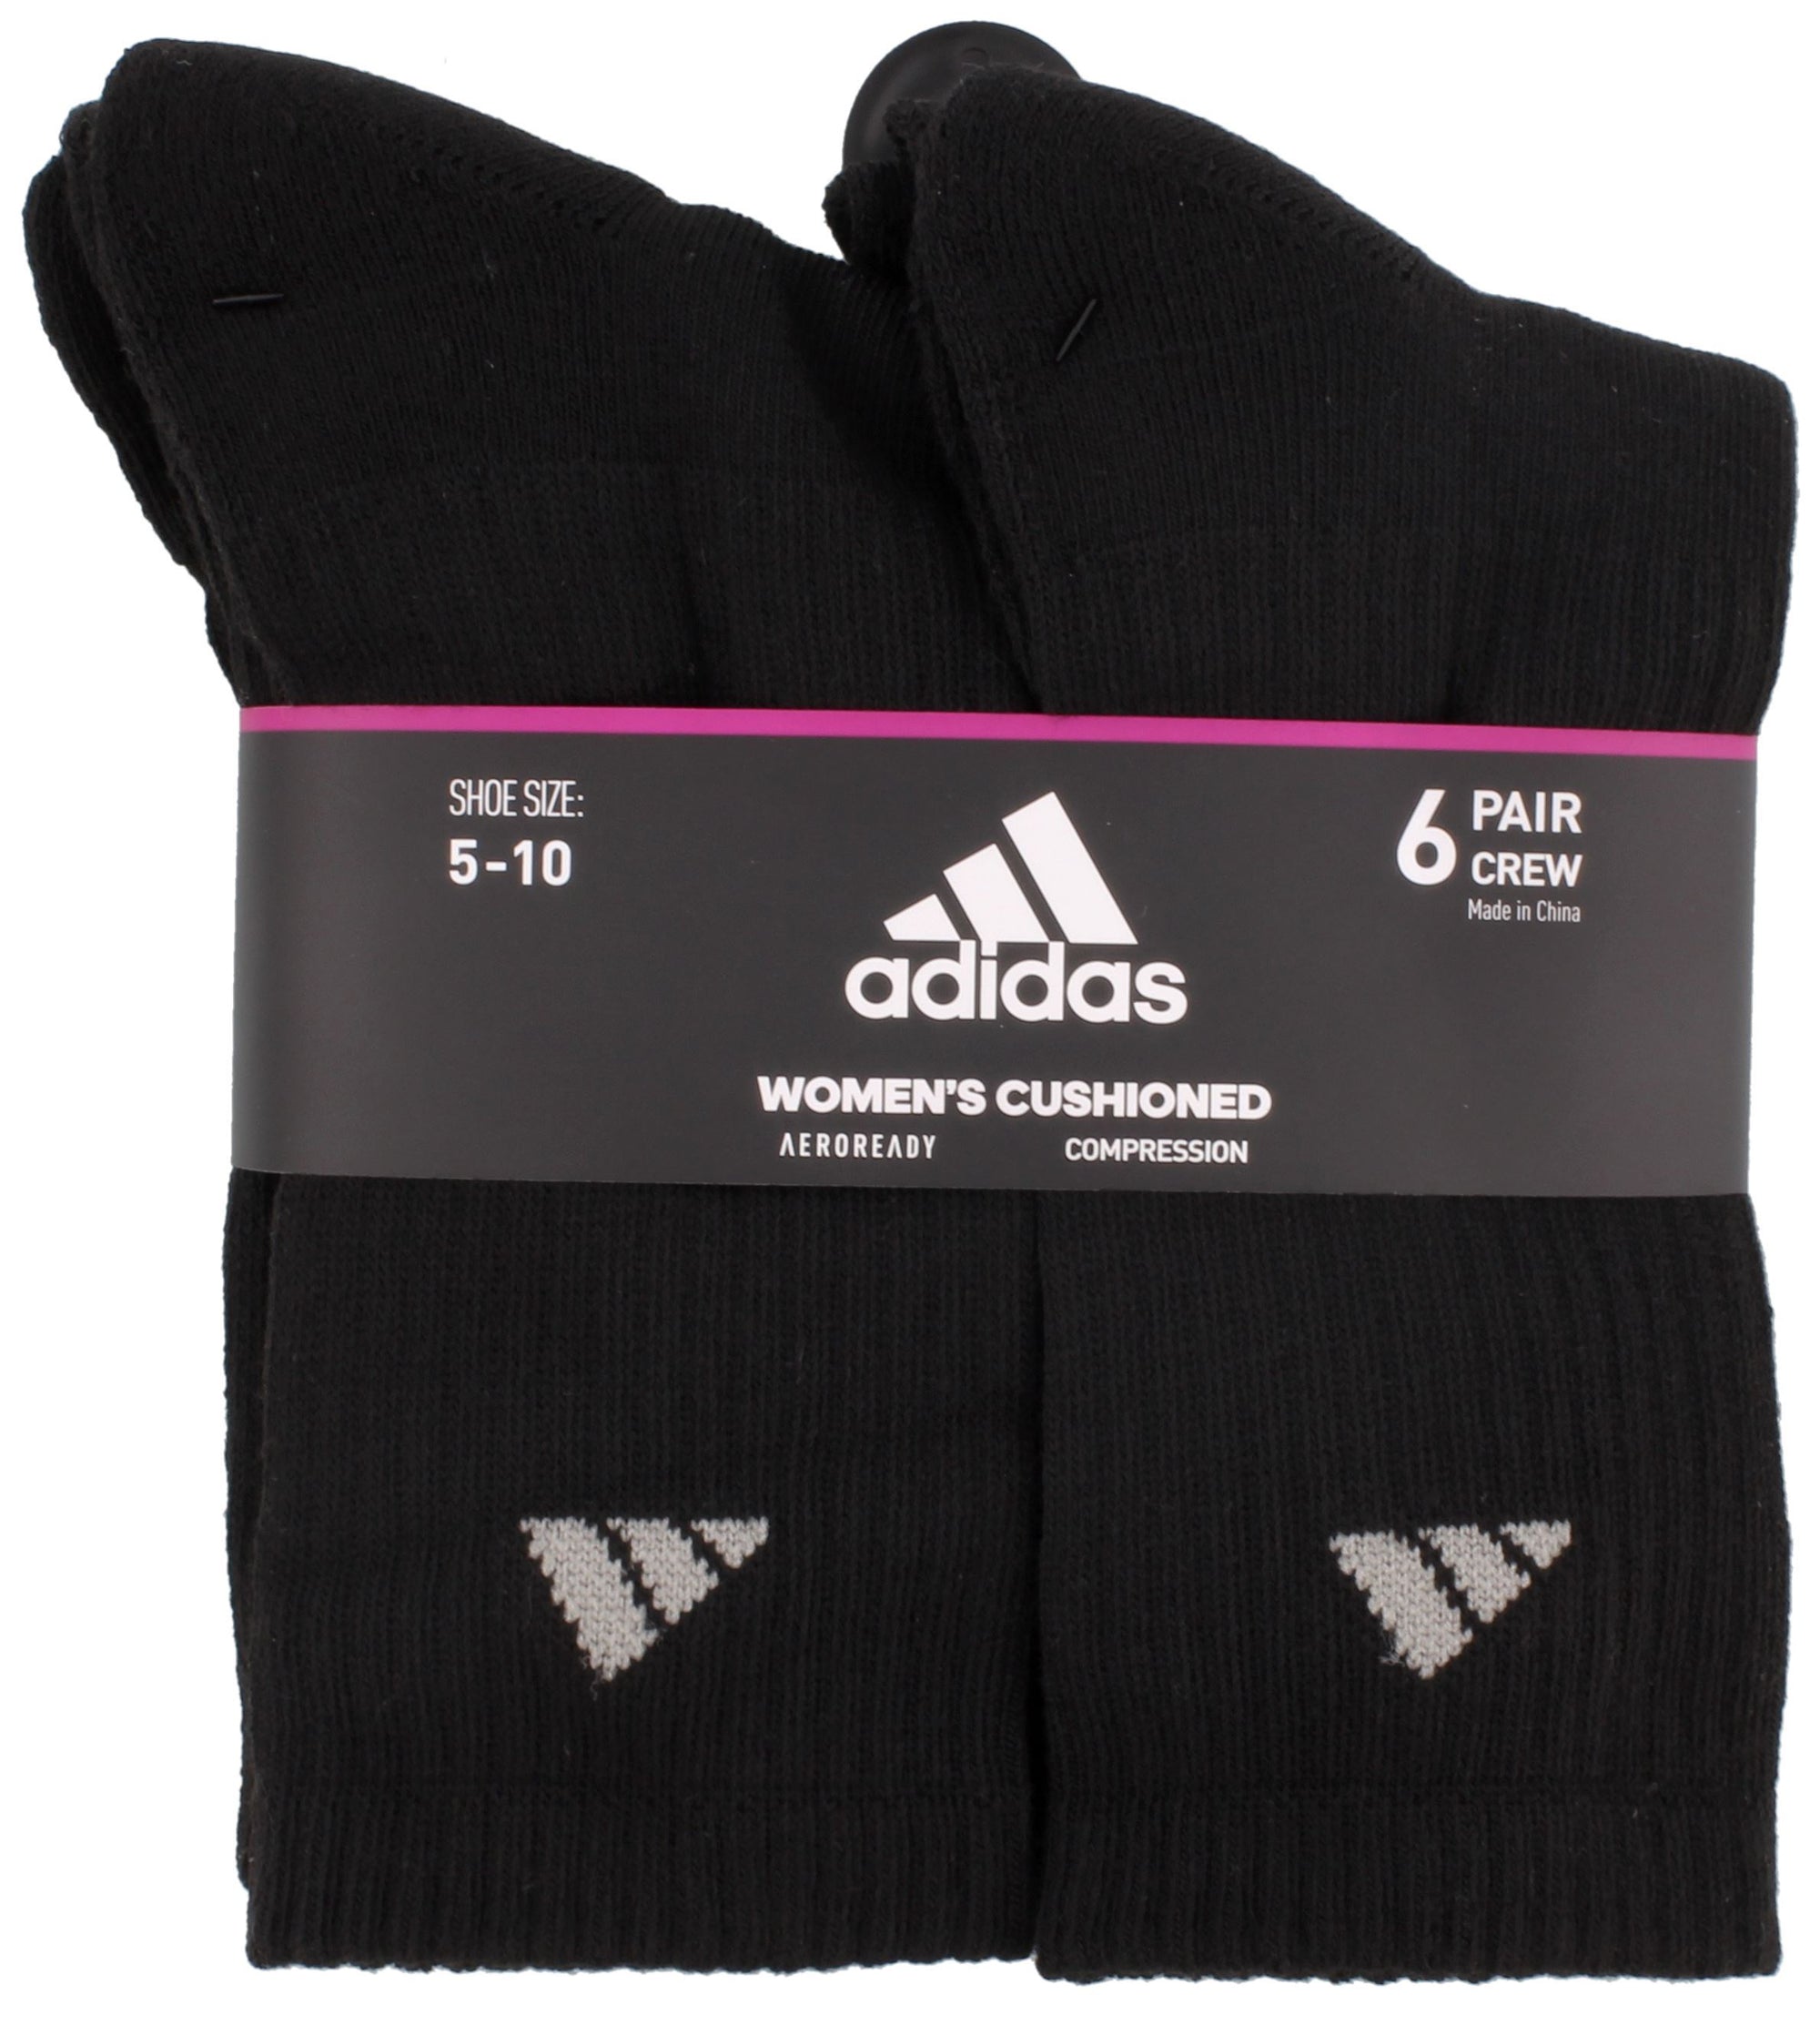 adidas Women's Athletic Crew Socks - 6 Pack Socks Adidas 